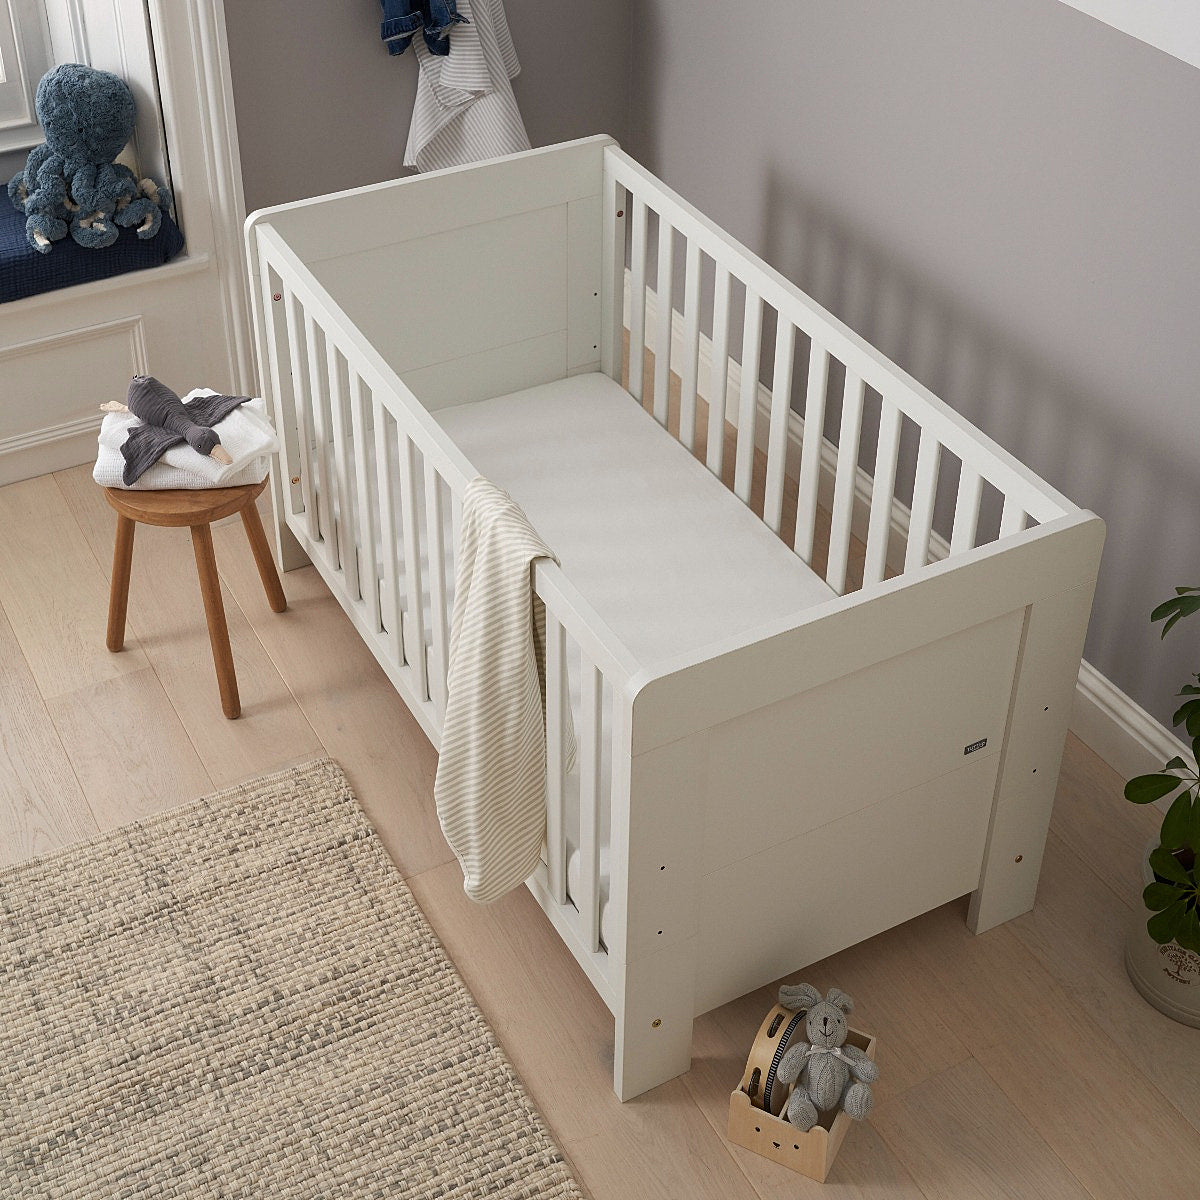 Tutti Bambini Essentials Alba Cot Bed - White -  | For Your Little One